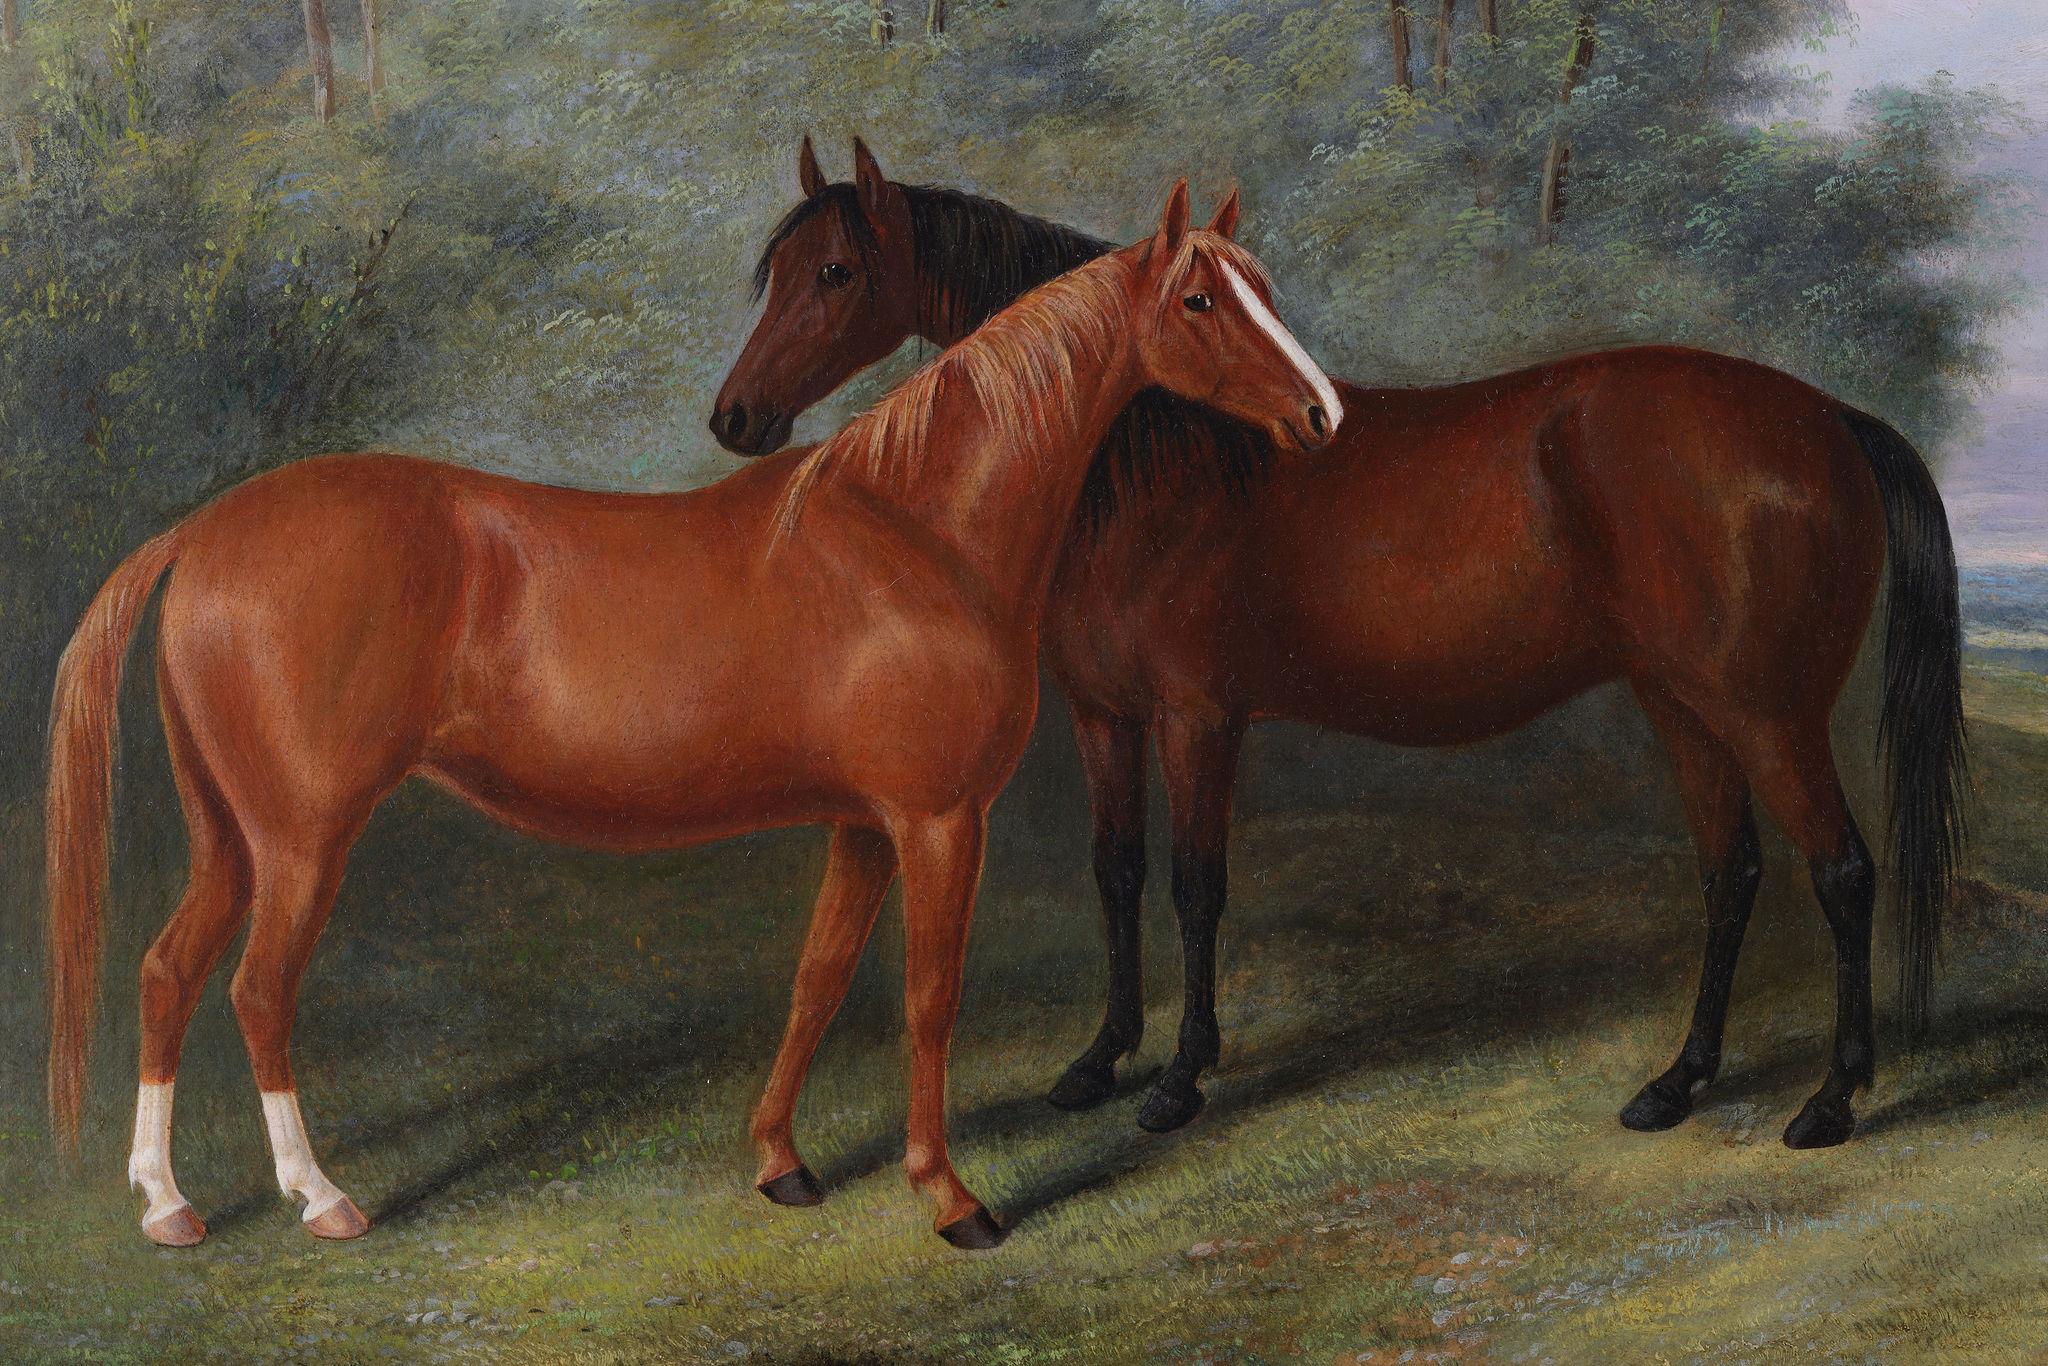 
James Clark Senior
(1812 – 1884)

Canvas Size: 24 x 36